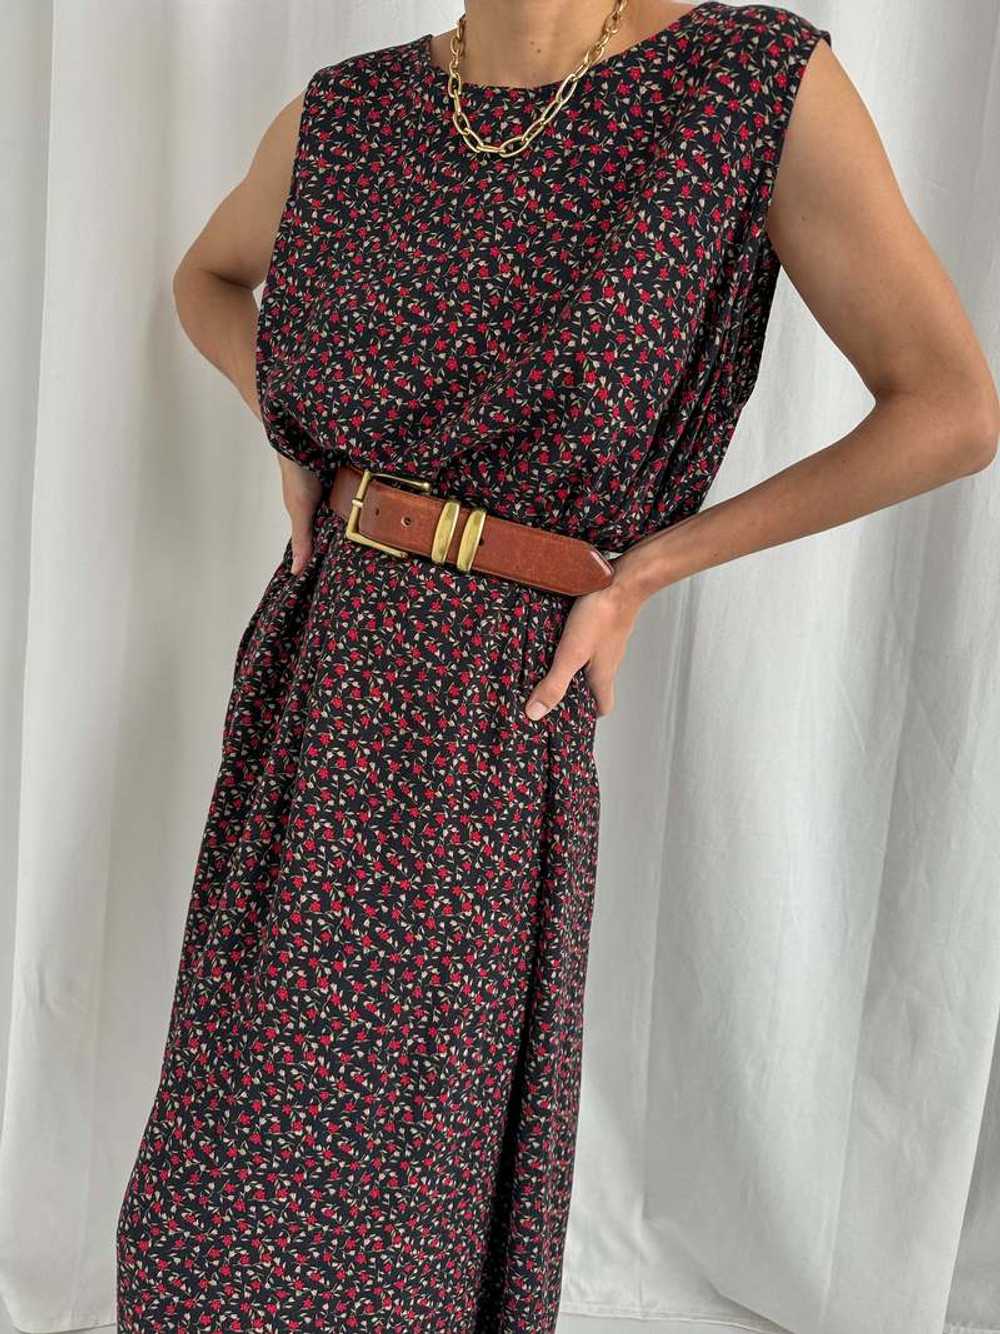 Vintage Sleeveless Maxi Dress - Cocoa/Floral - image 4